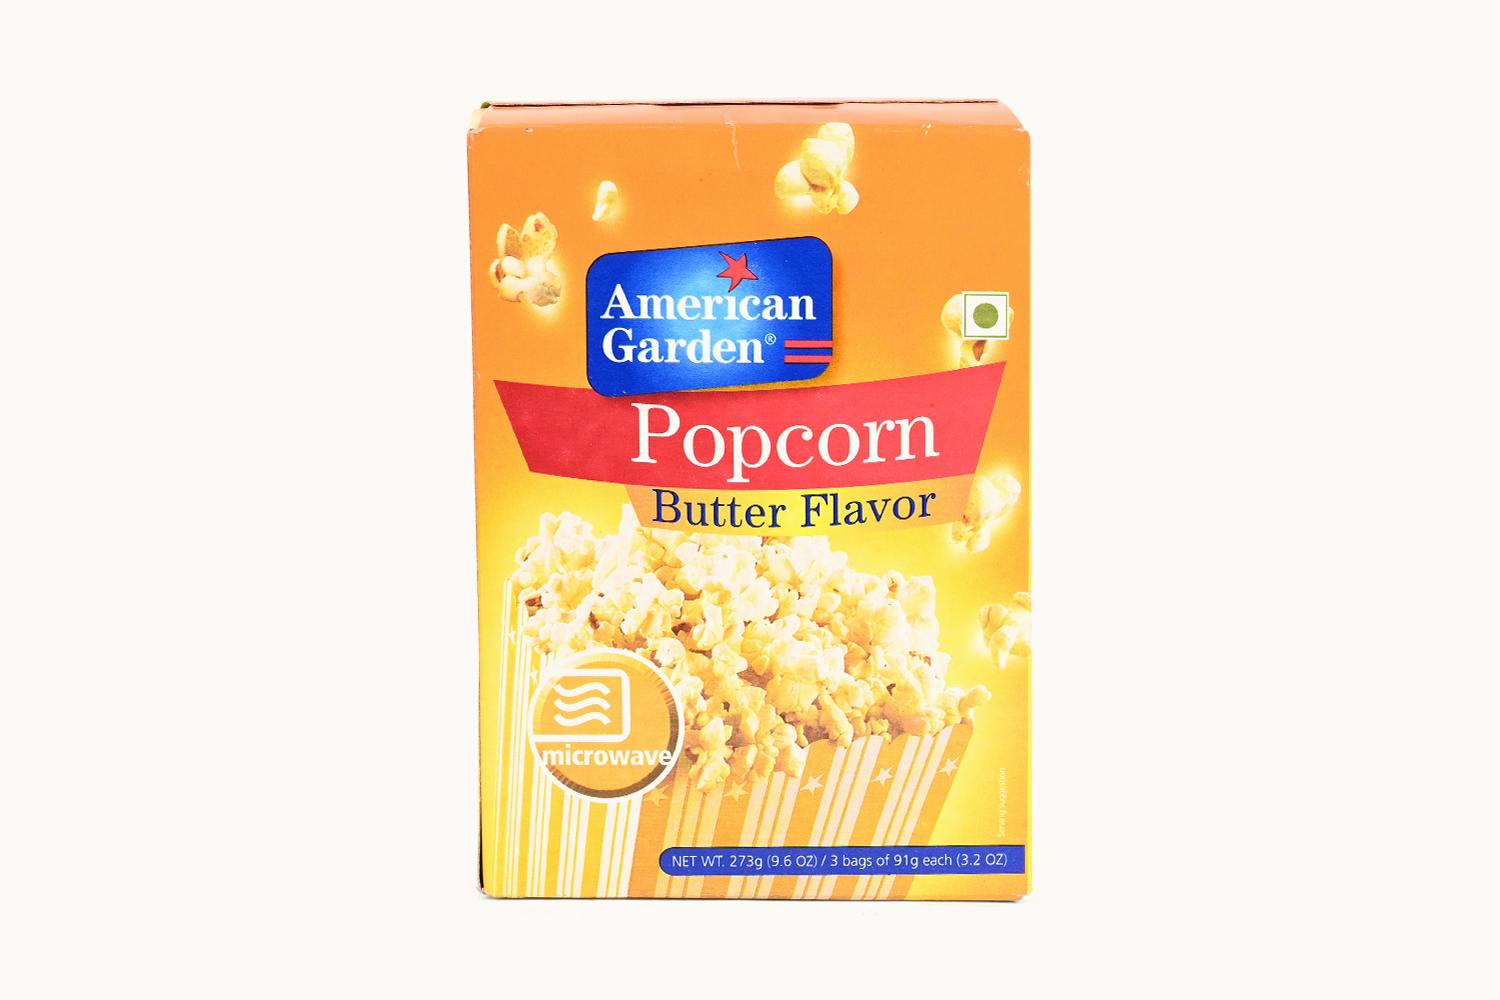 American Garden Popcorn - Butter